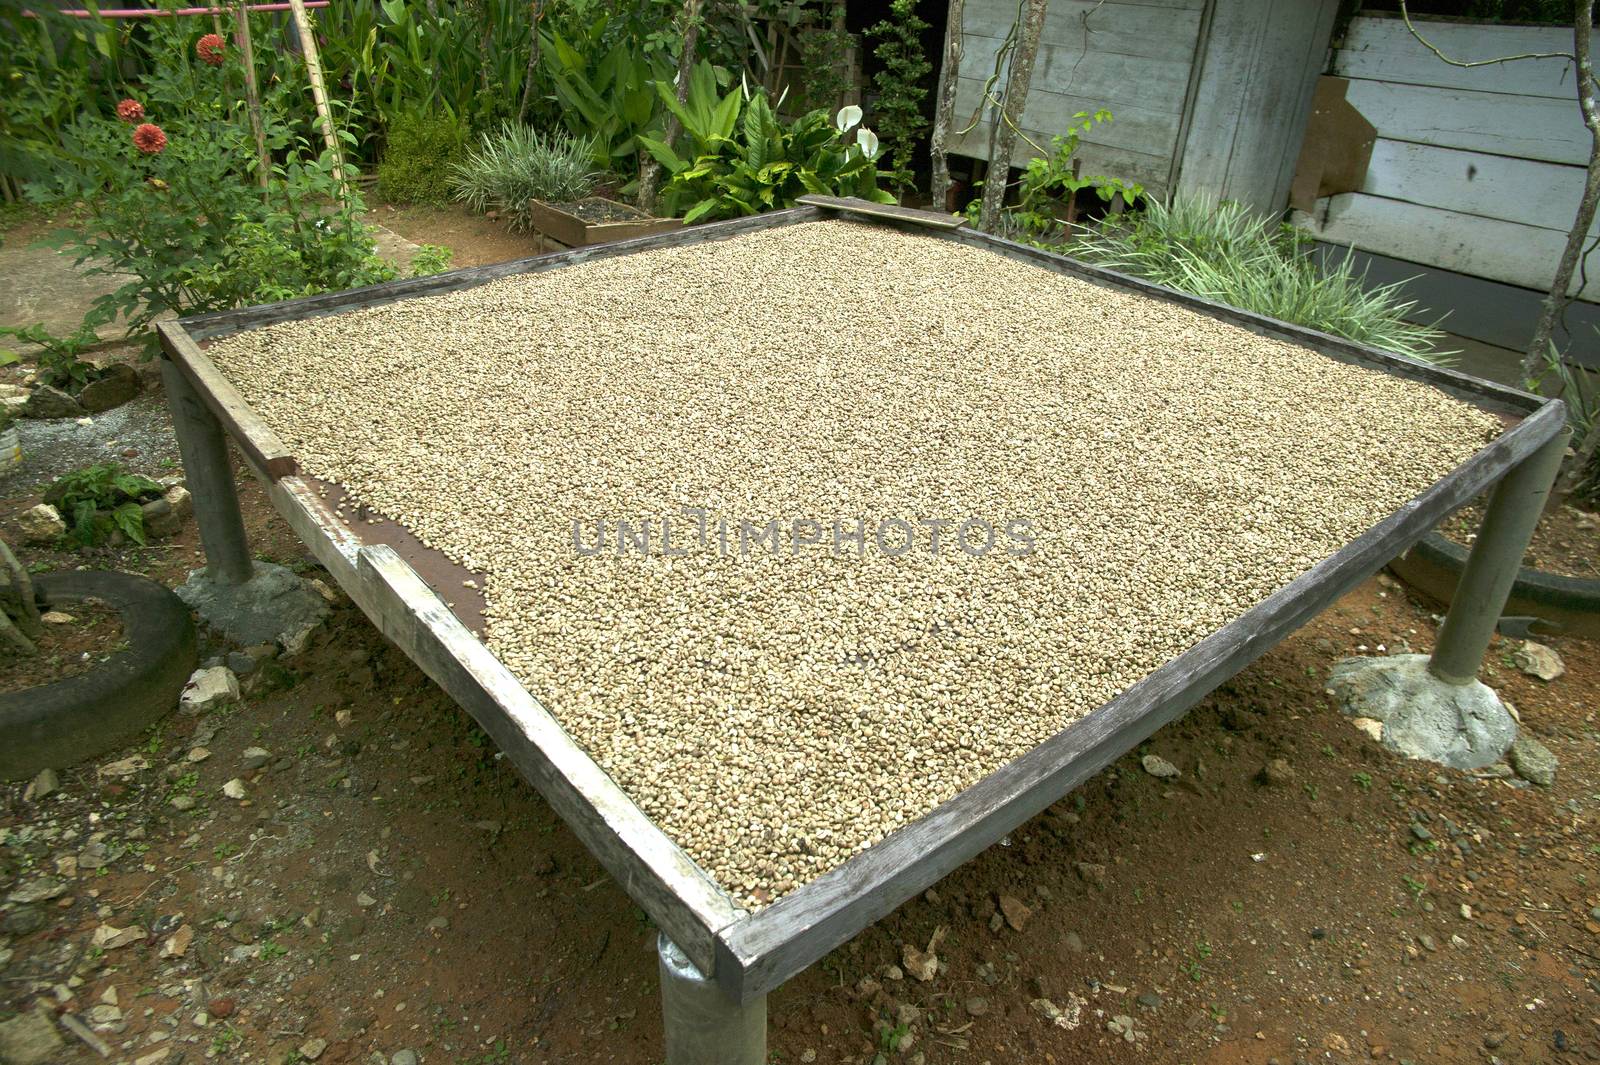 raw greenbeans Toraja on drying process